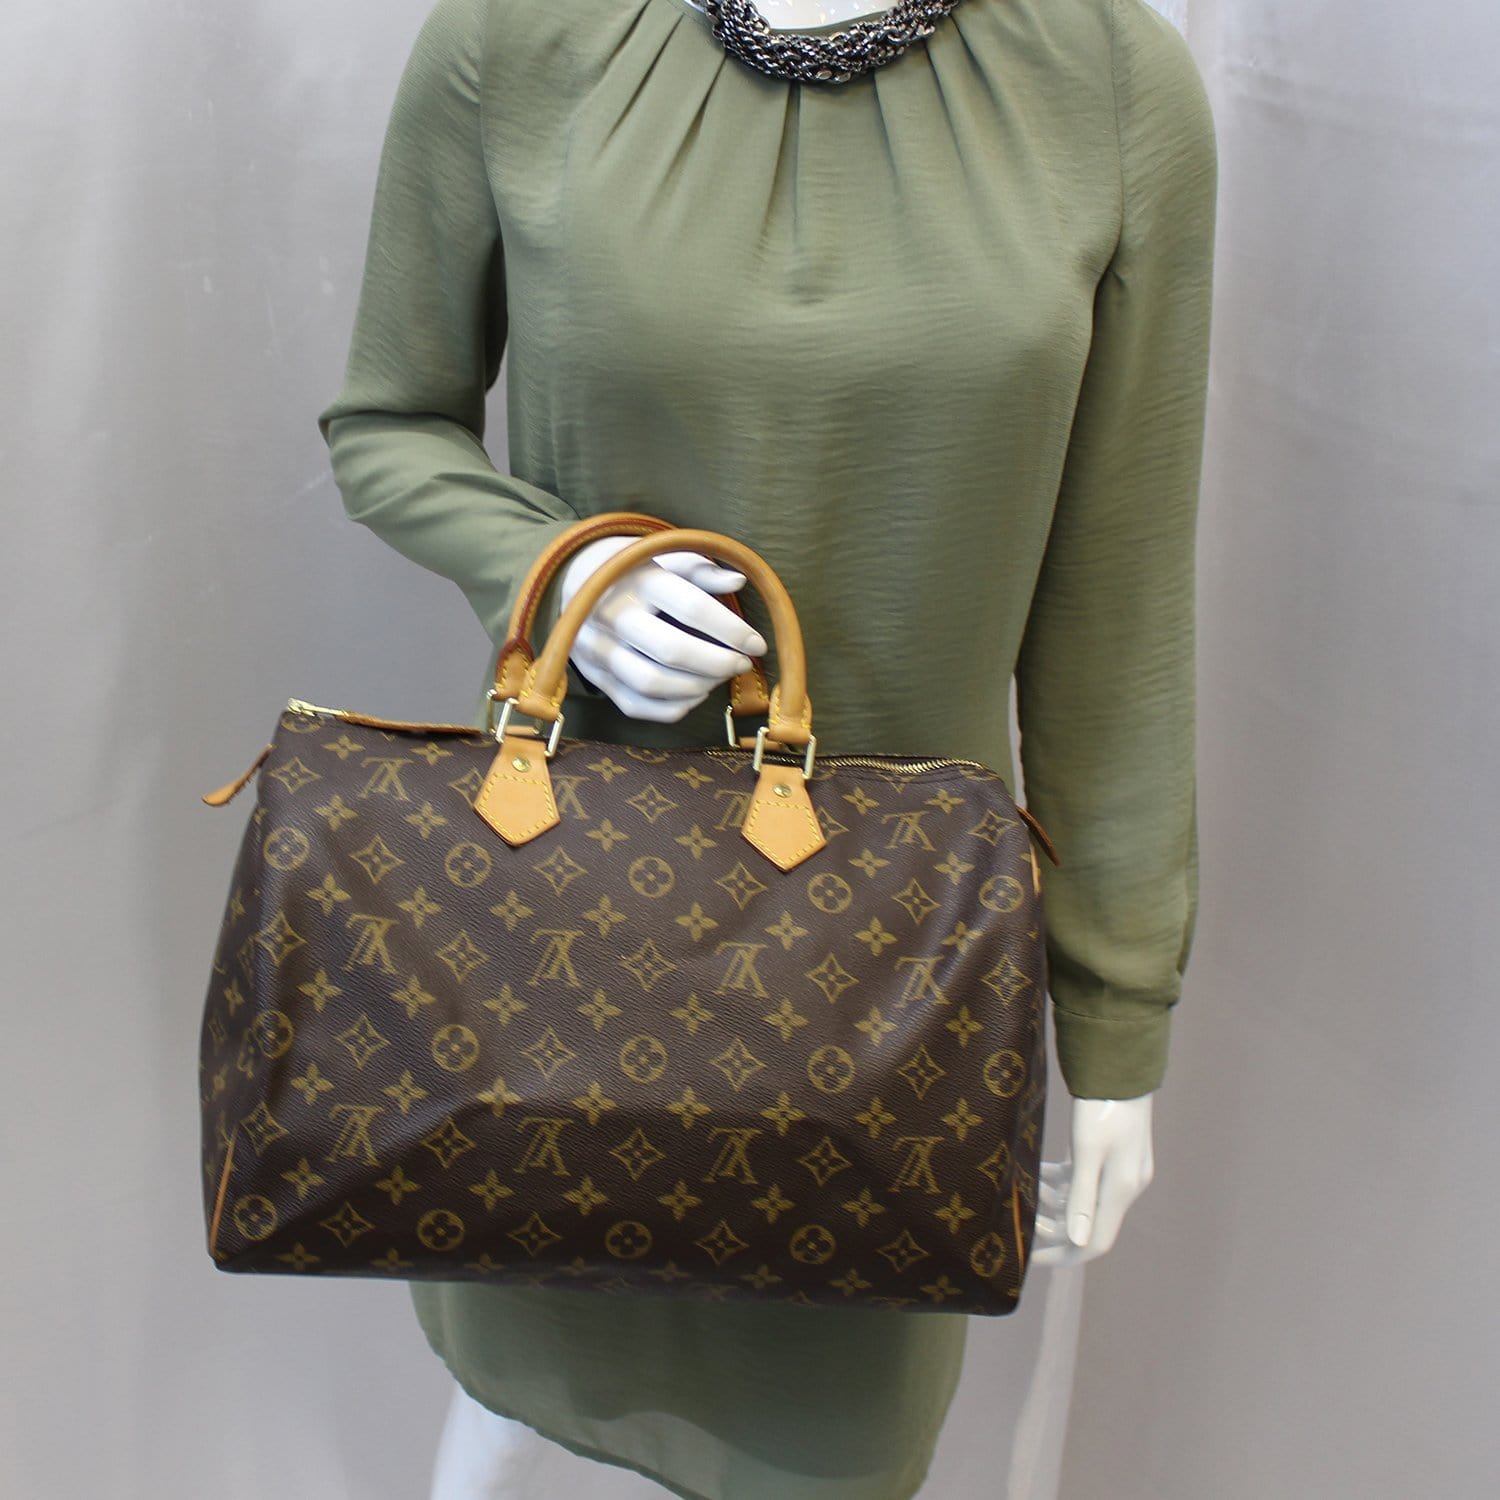 5. Urban Satchel Louis Vuitton Bag